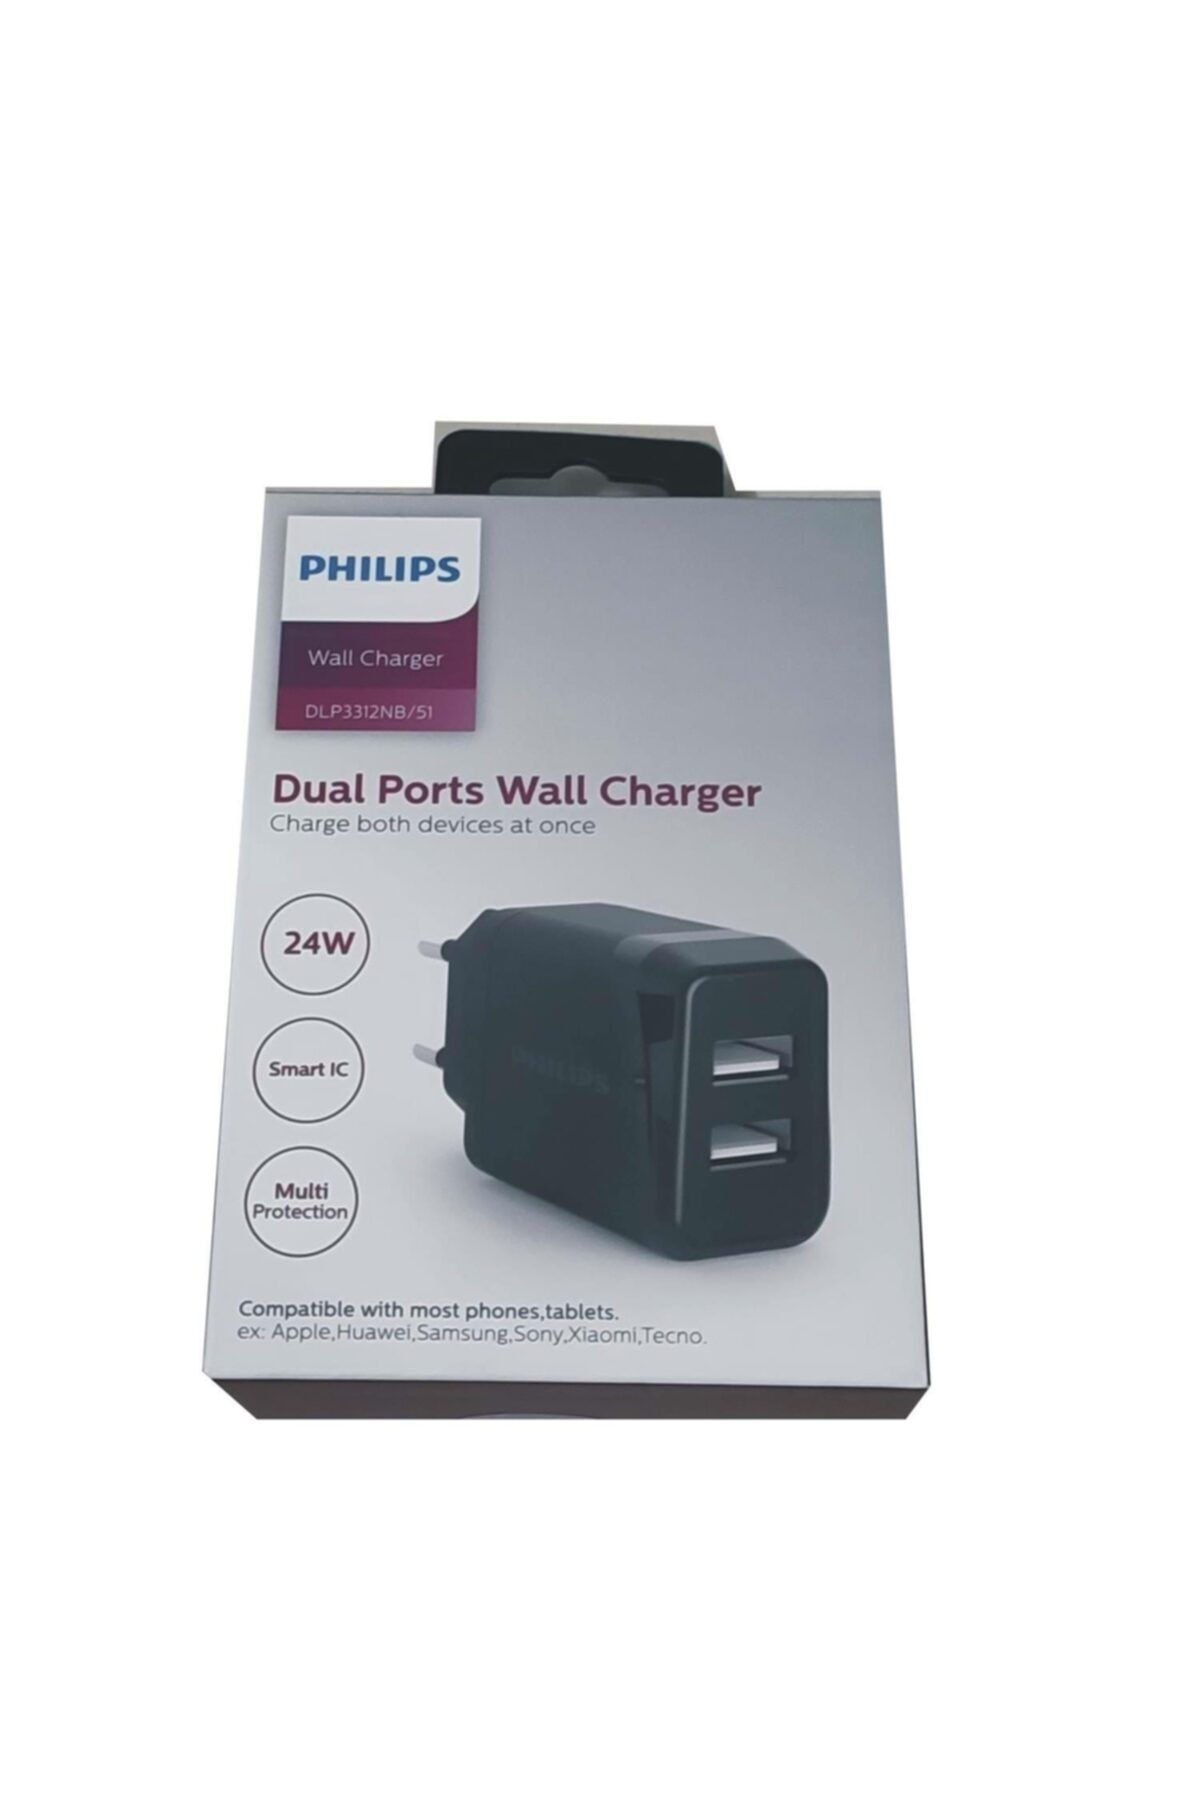 Philips Phılıps Dlp3312nb/51 24w 2.4a Çift Usb Akıllı Hızlı Şarj Cihazı